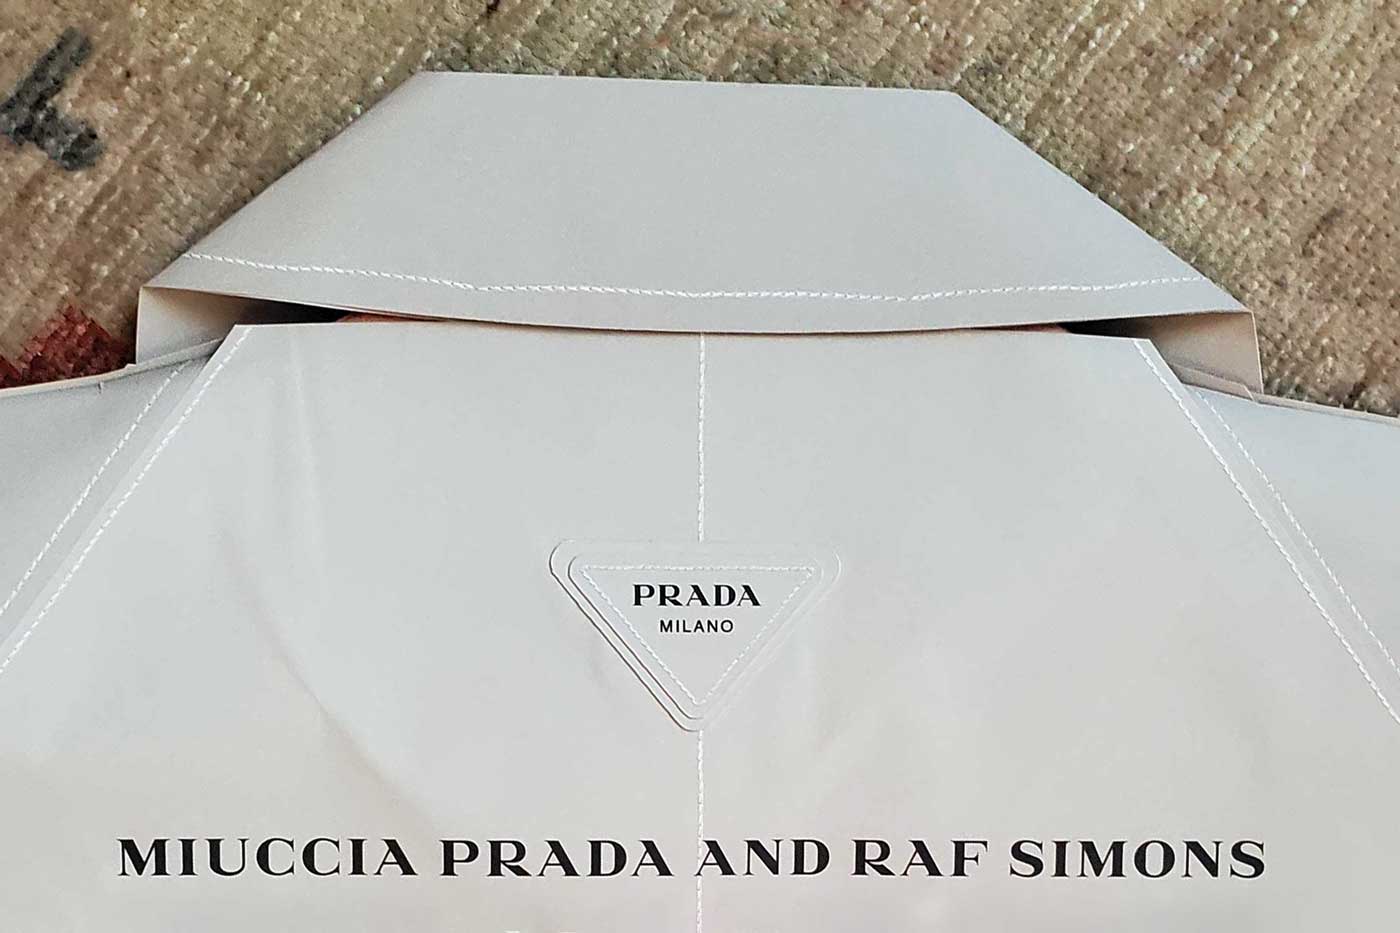 Prada's SS23 Show Invite Is a Paper Coat by Miuccia & Raf Simons